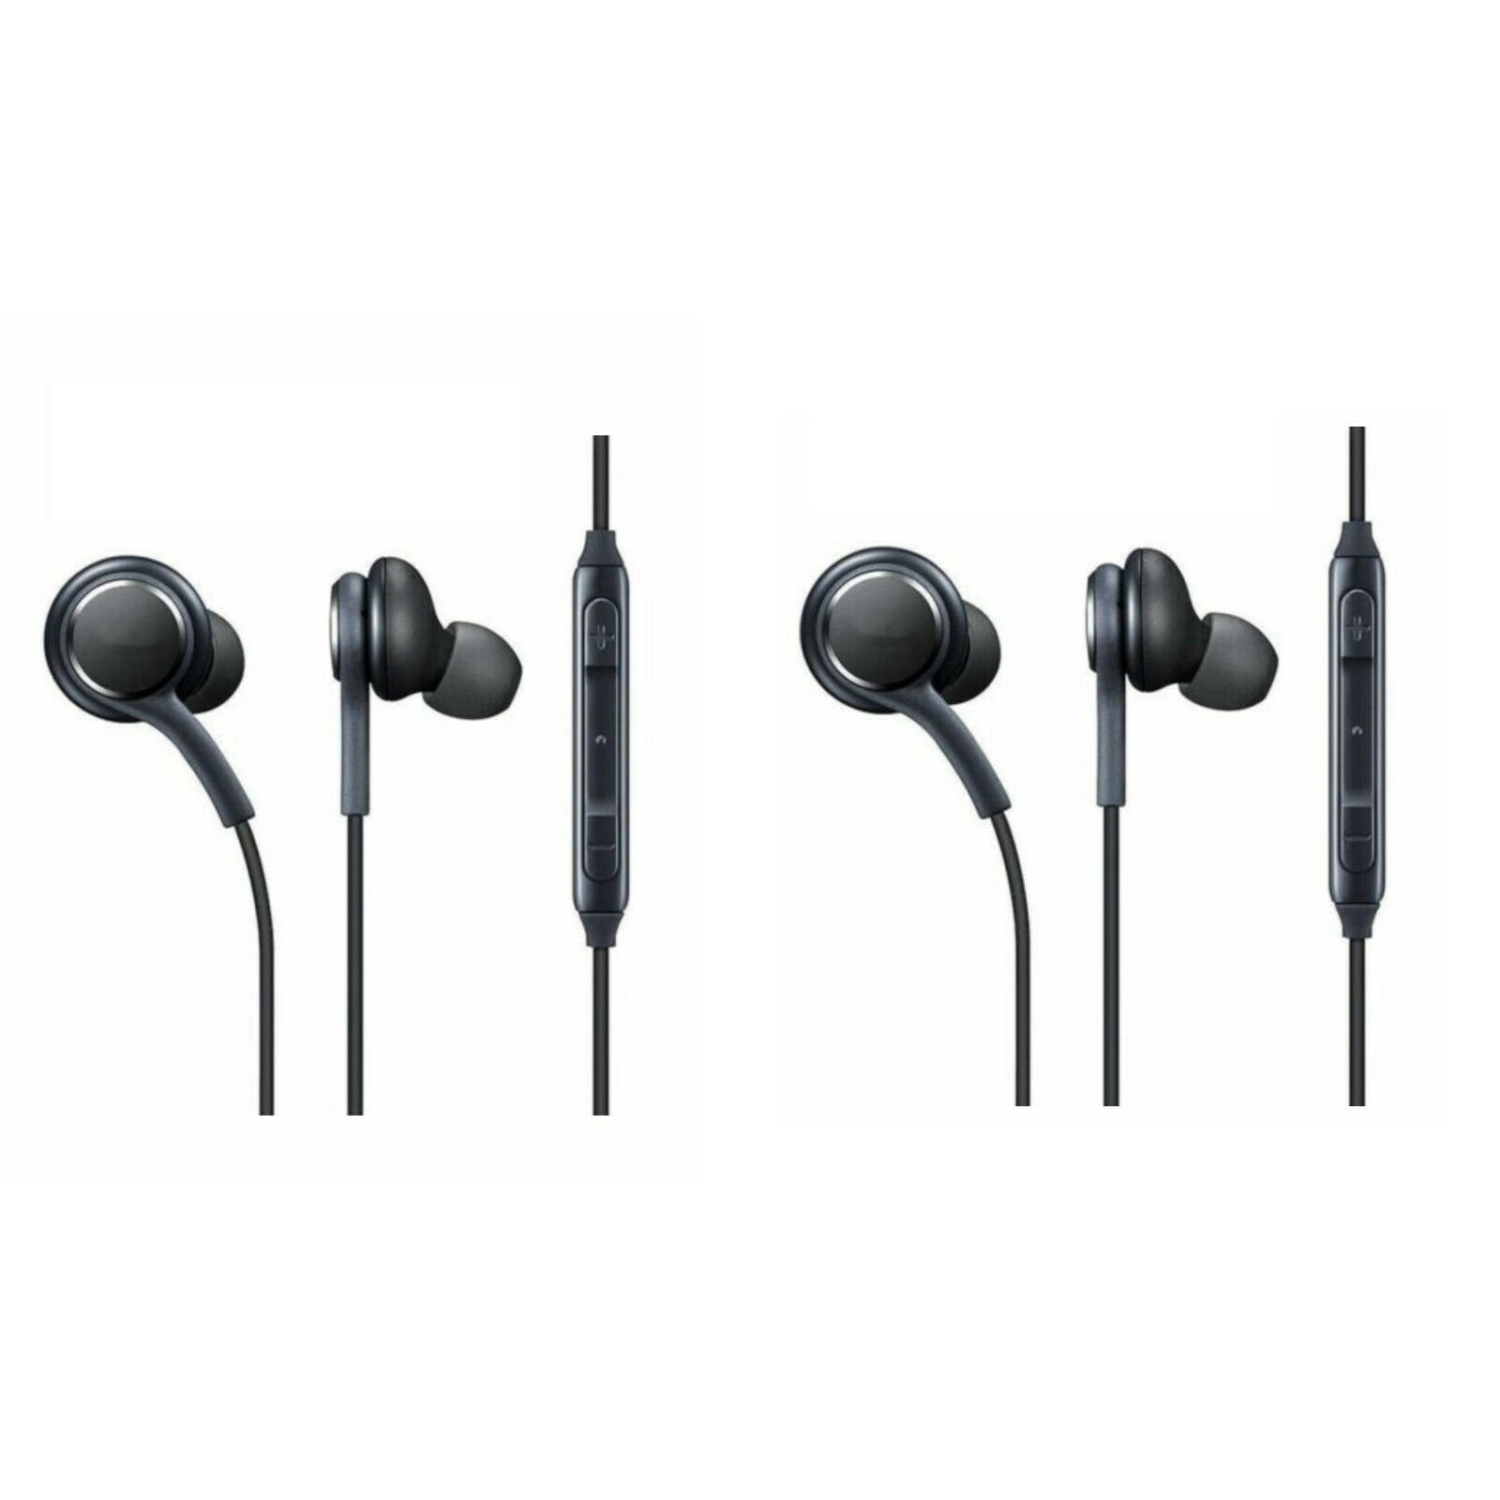 CABLESHARK for AKG [2 Packs] Headphones Earphones 3.5mm Audio Jack & Mic Compatible for Samsung LG Google Huawei Moto Sony Oneplus, Gray